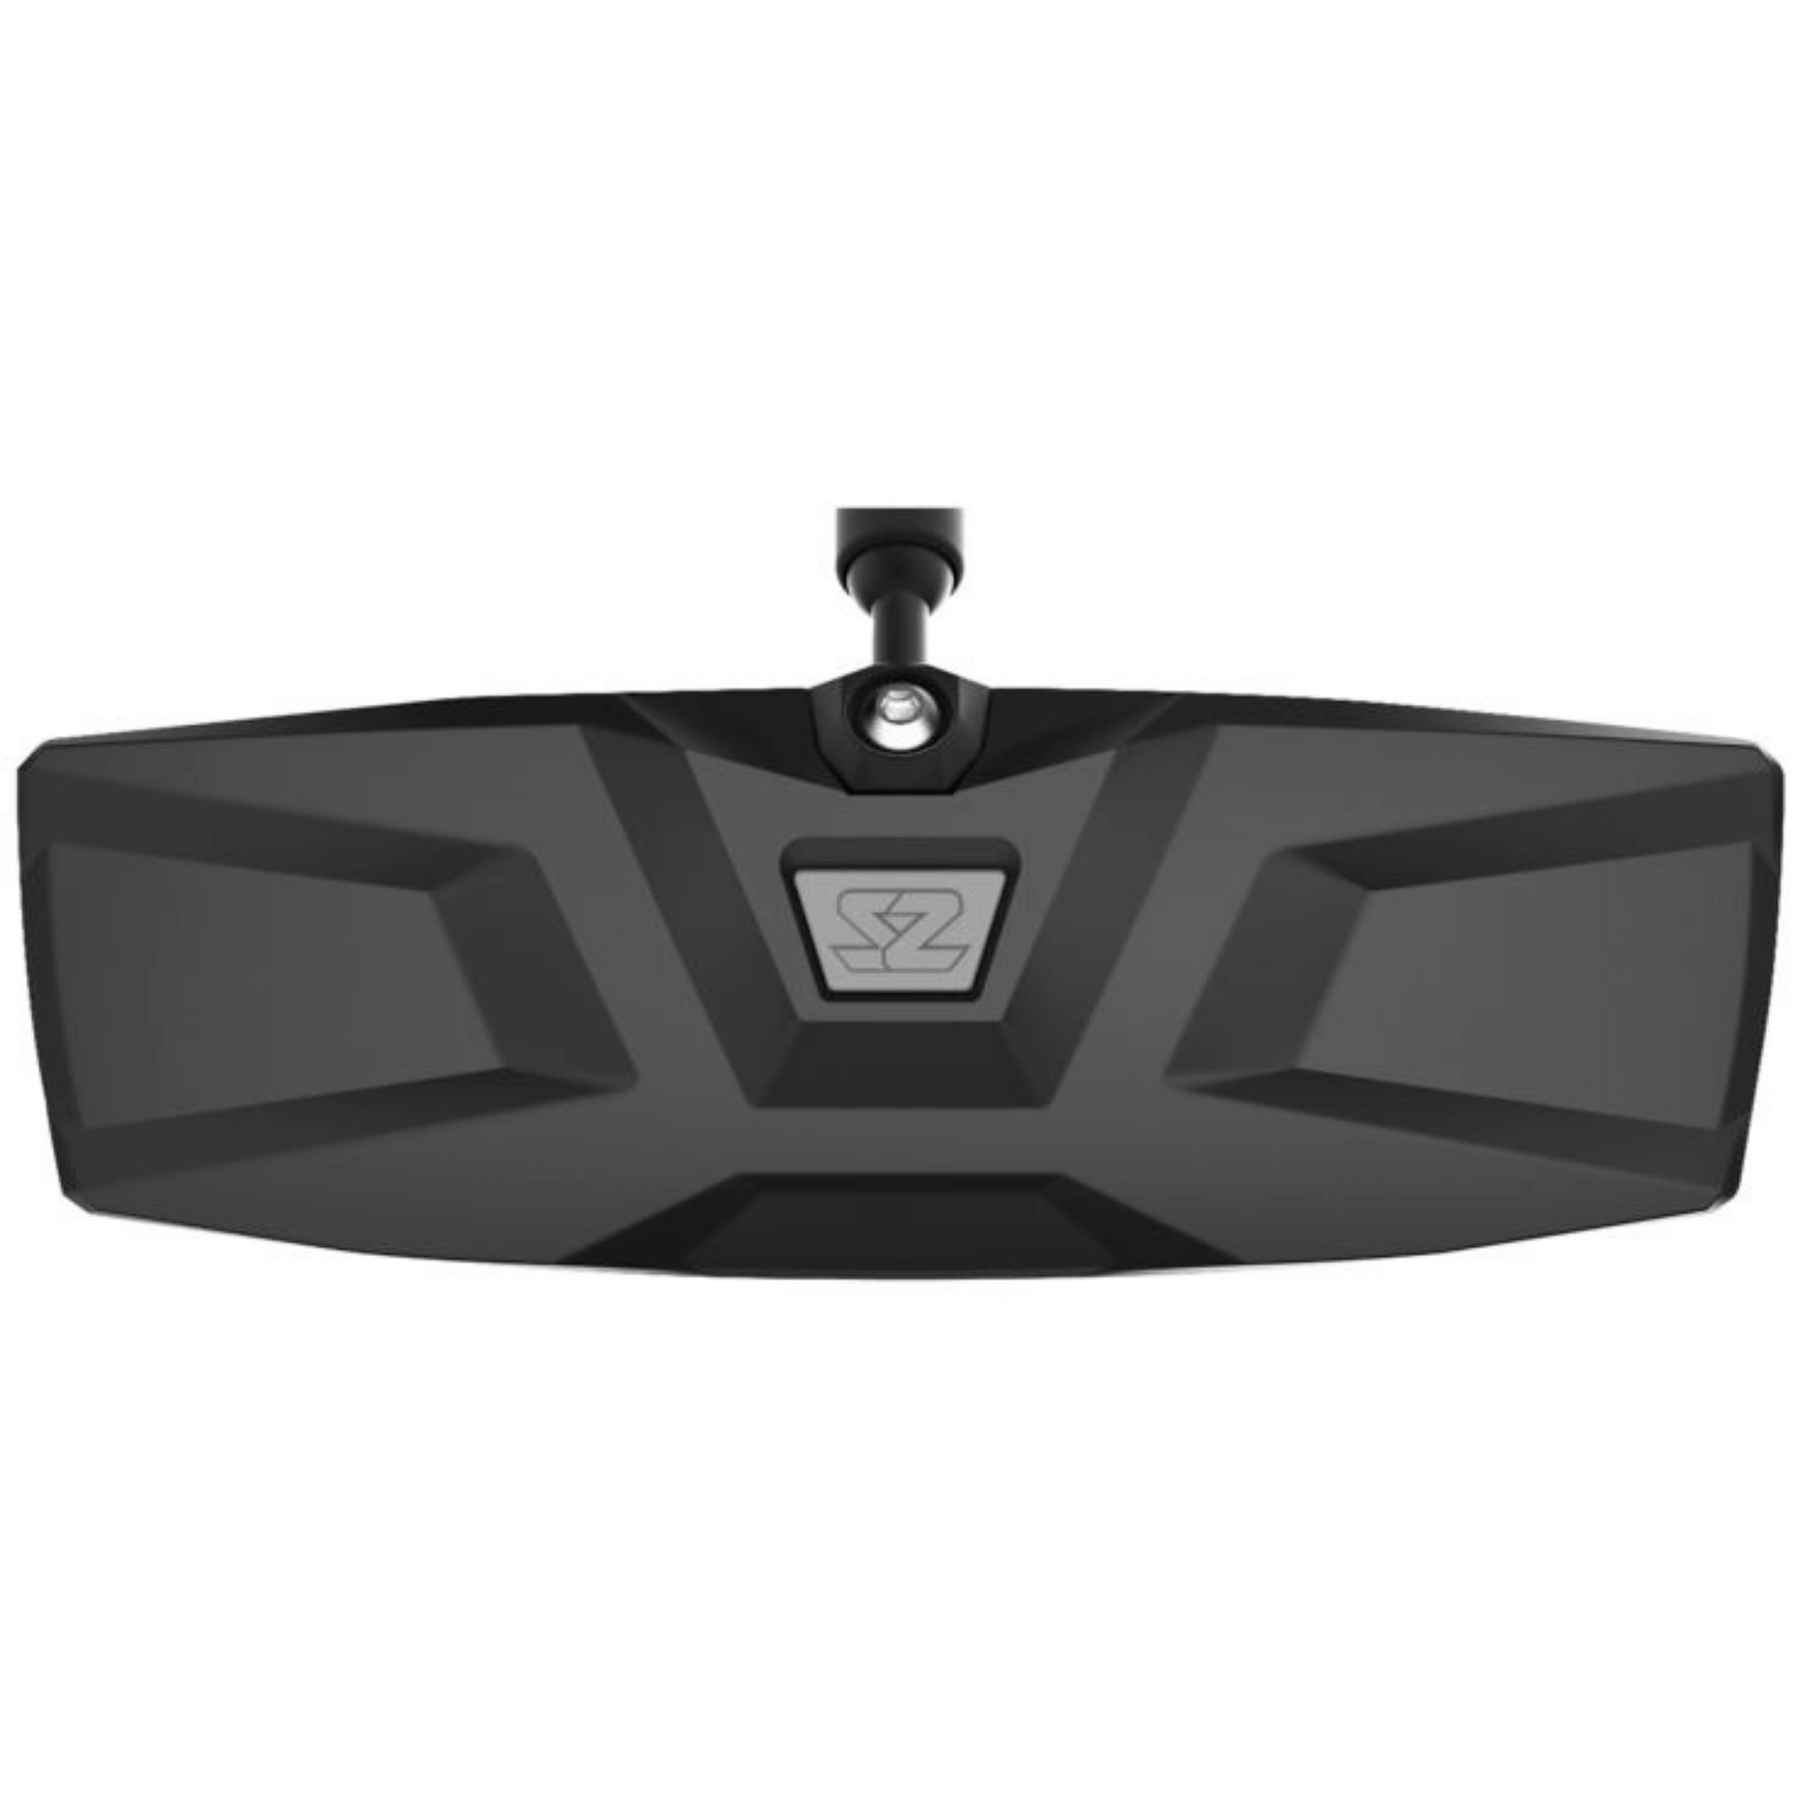 Halo-R Rear View Mirror (Universal)